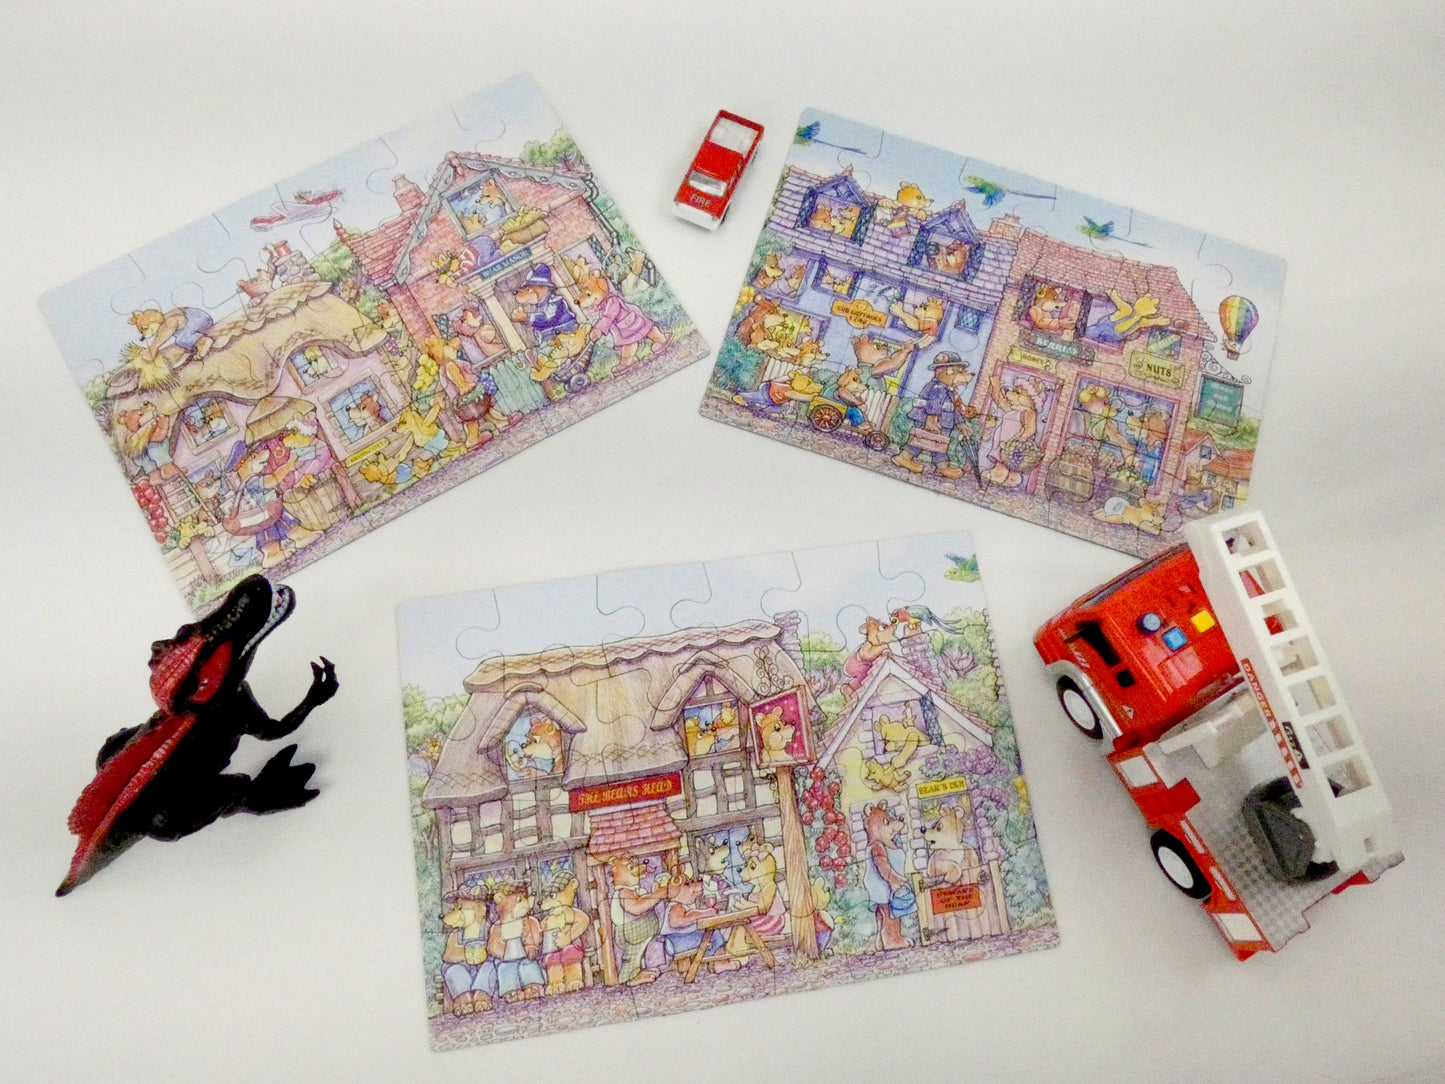 Bear Street - Armand Foster 3 x 24 Piece Kids Jigsaw Puzzle